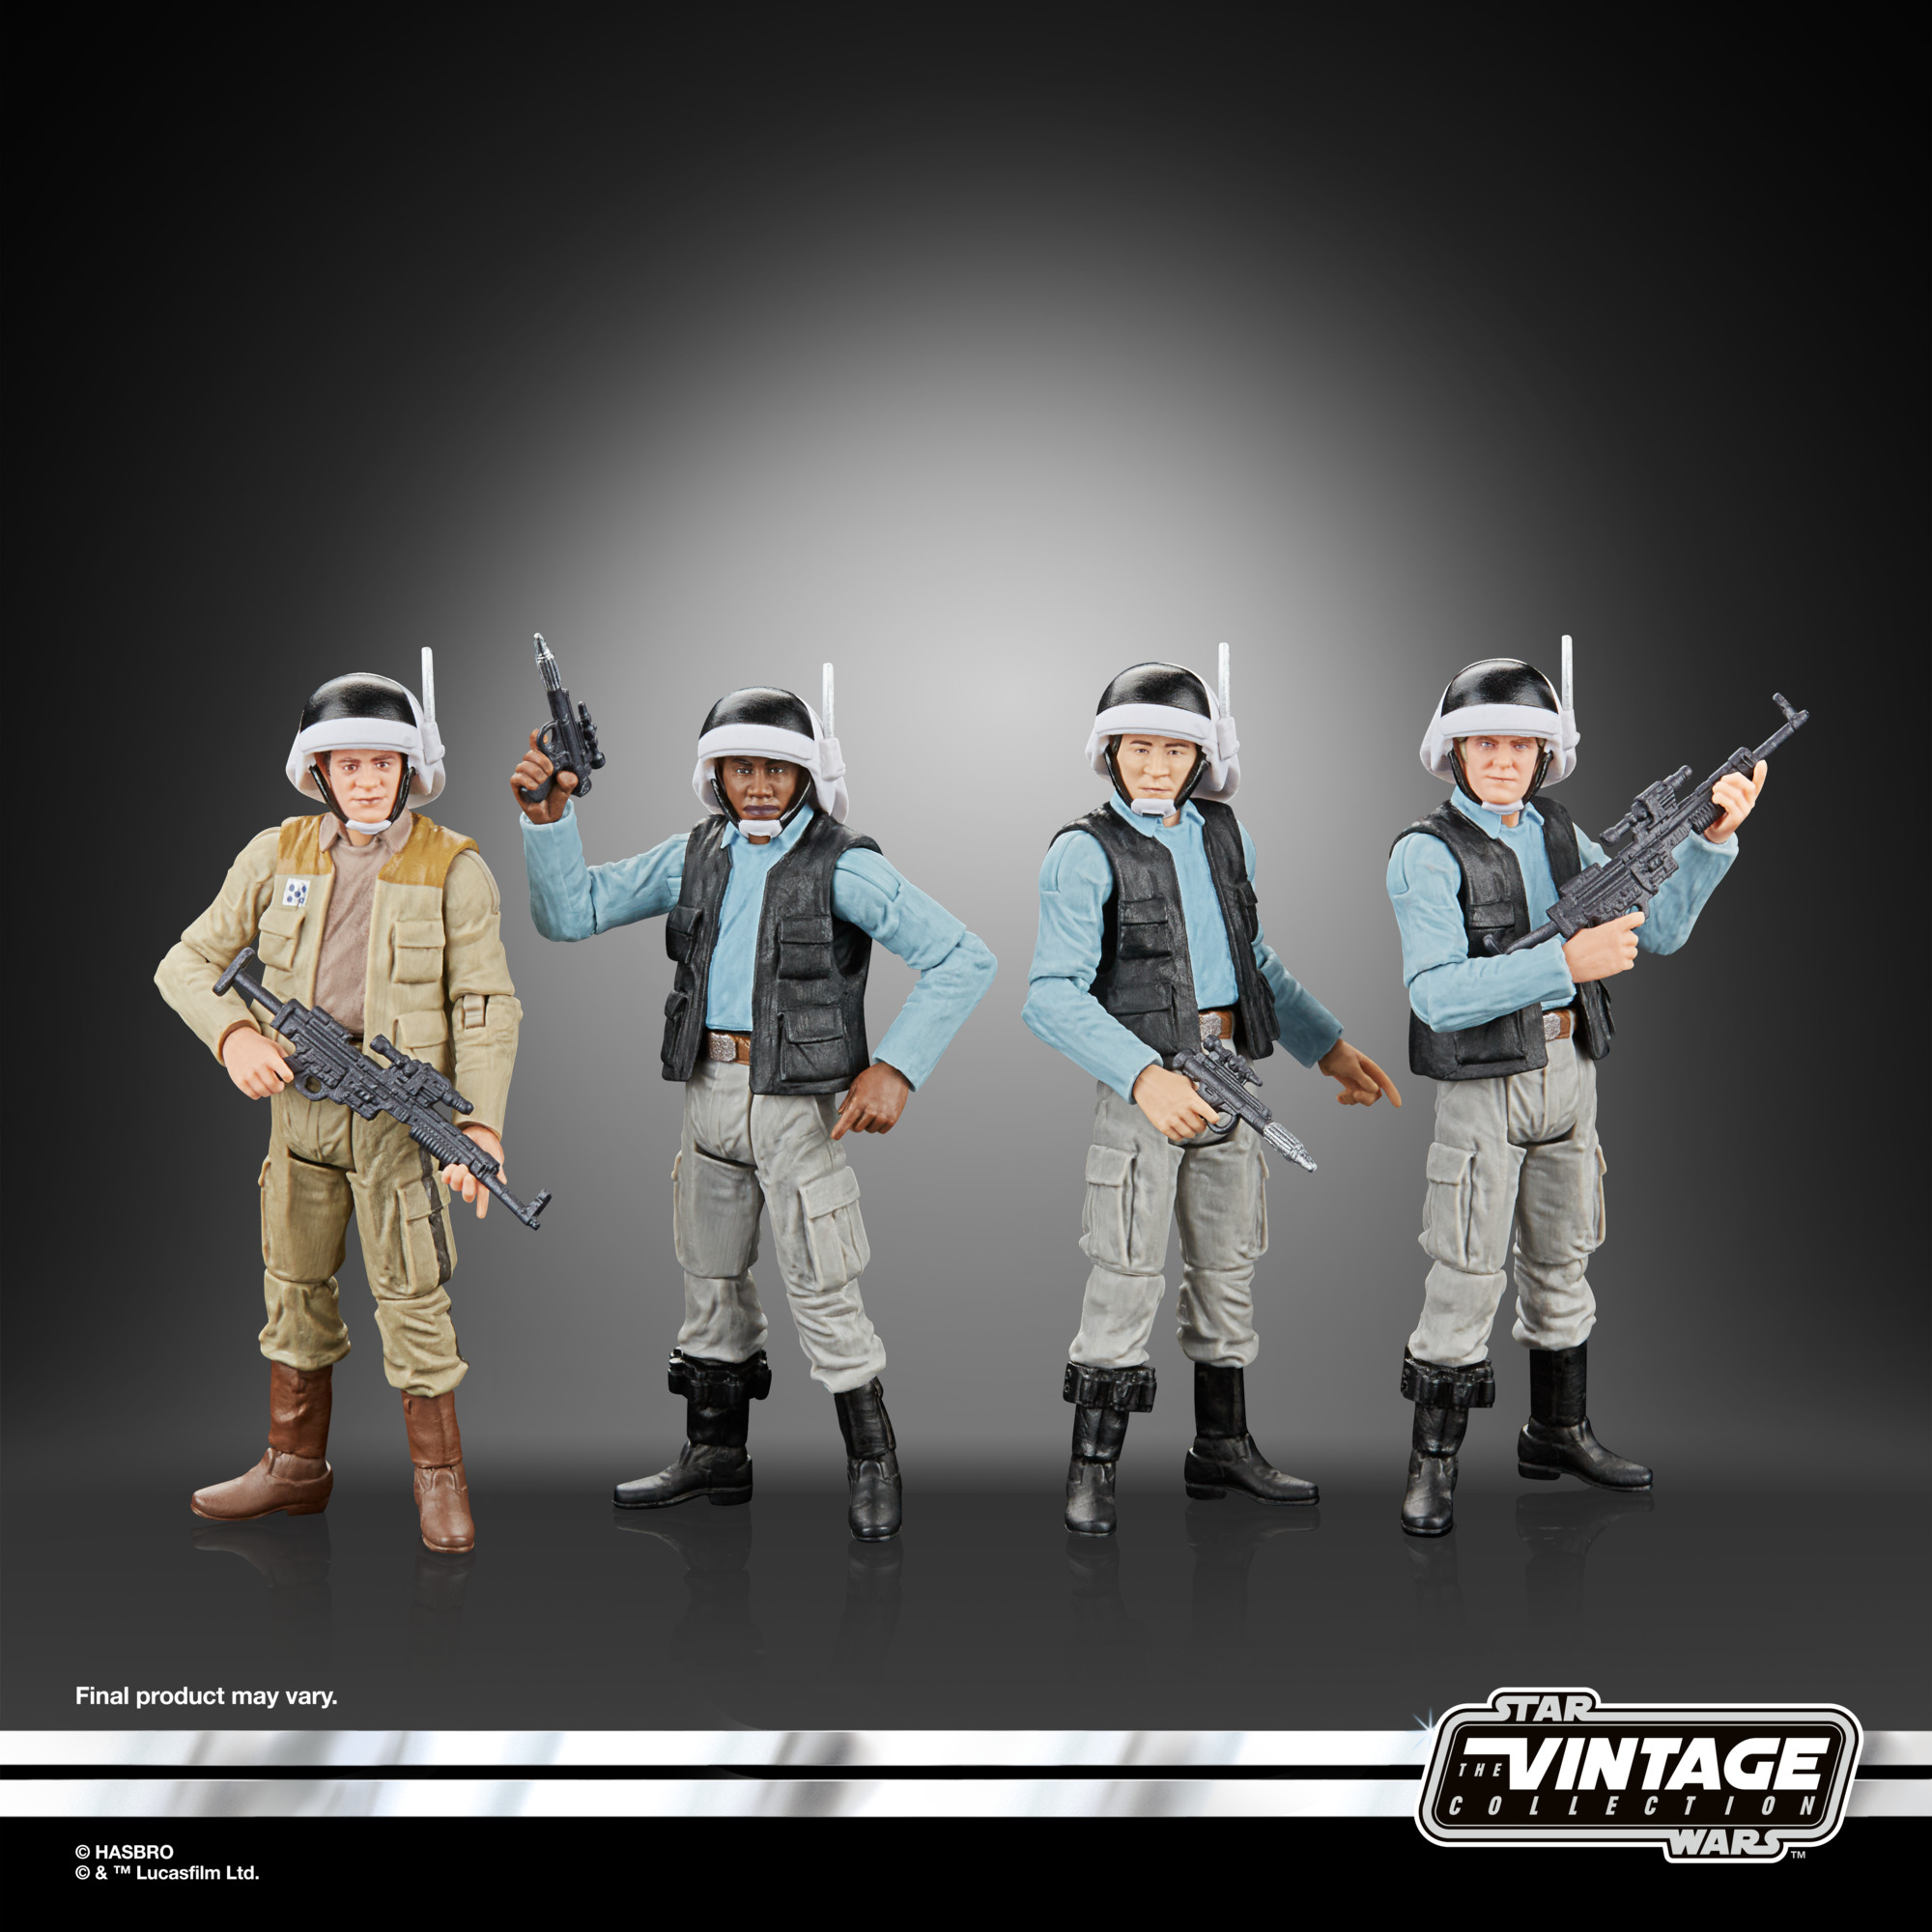 Star Wars The Vintage Collection Rebel Fleet Trooperes  5010993969272